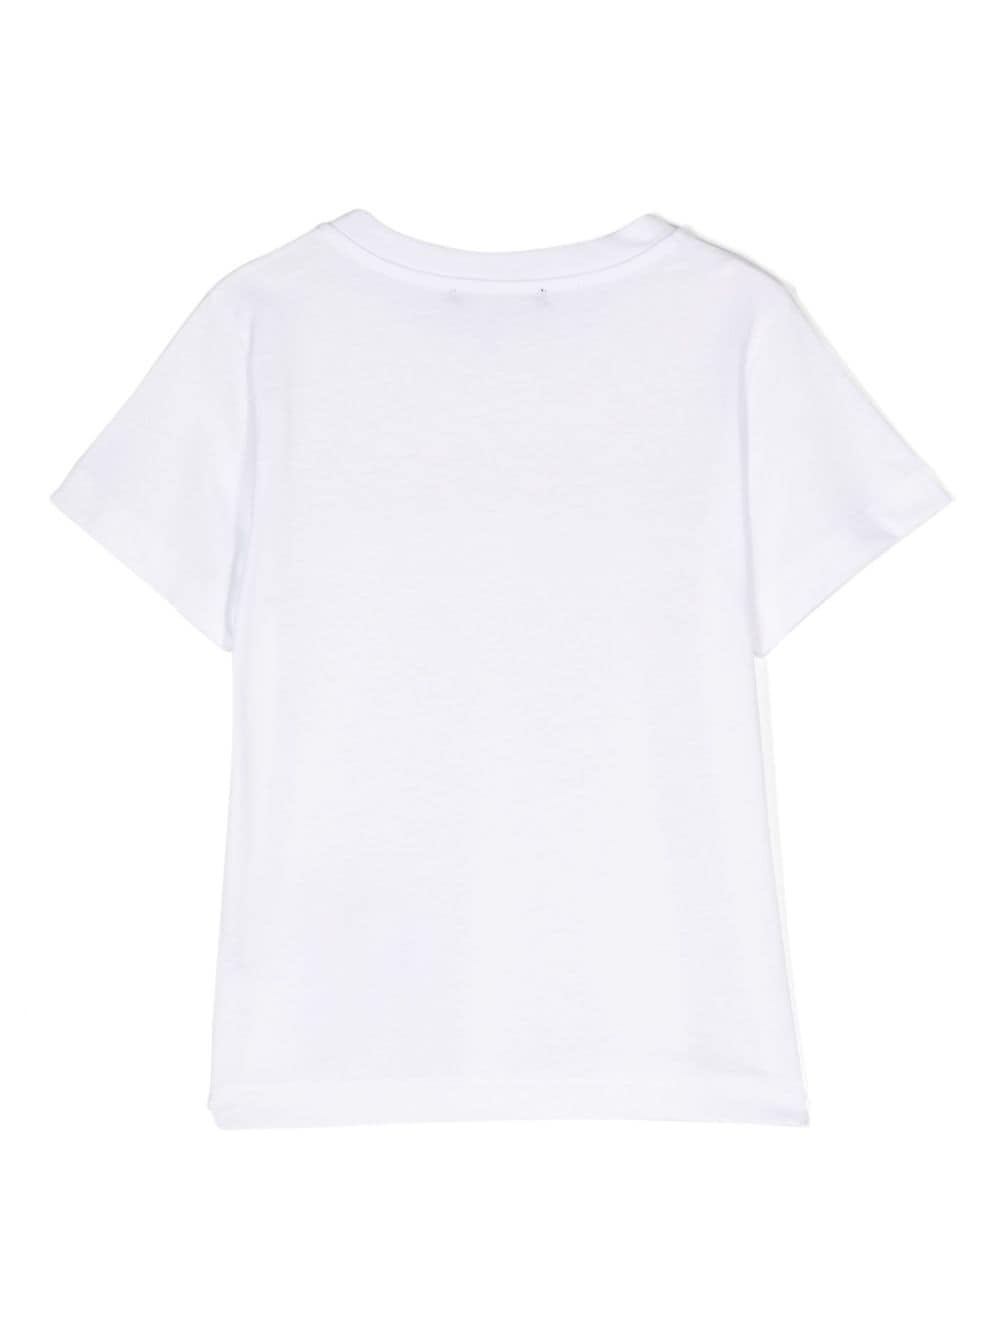 T-shirt bianca bambina con logo